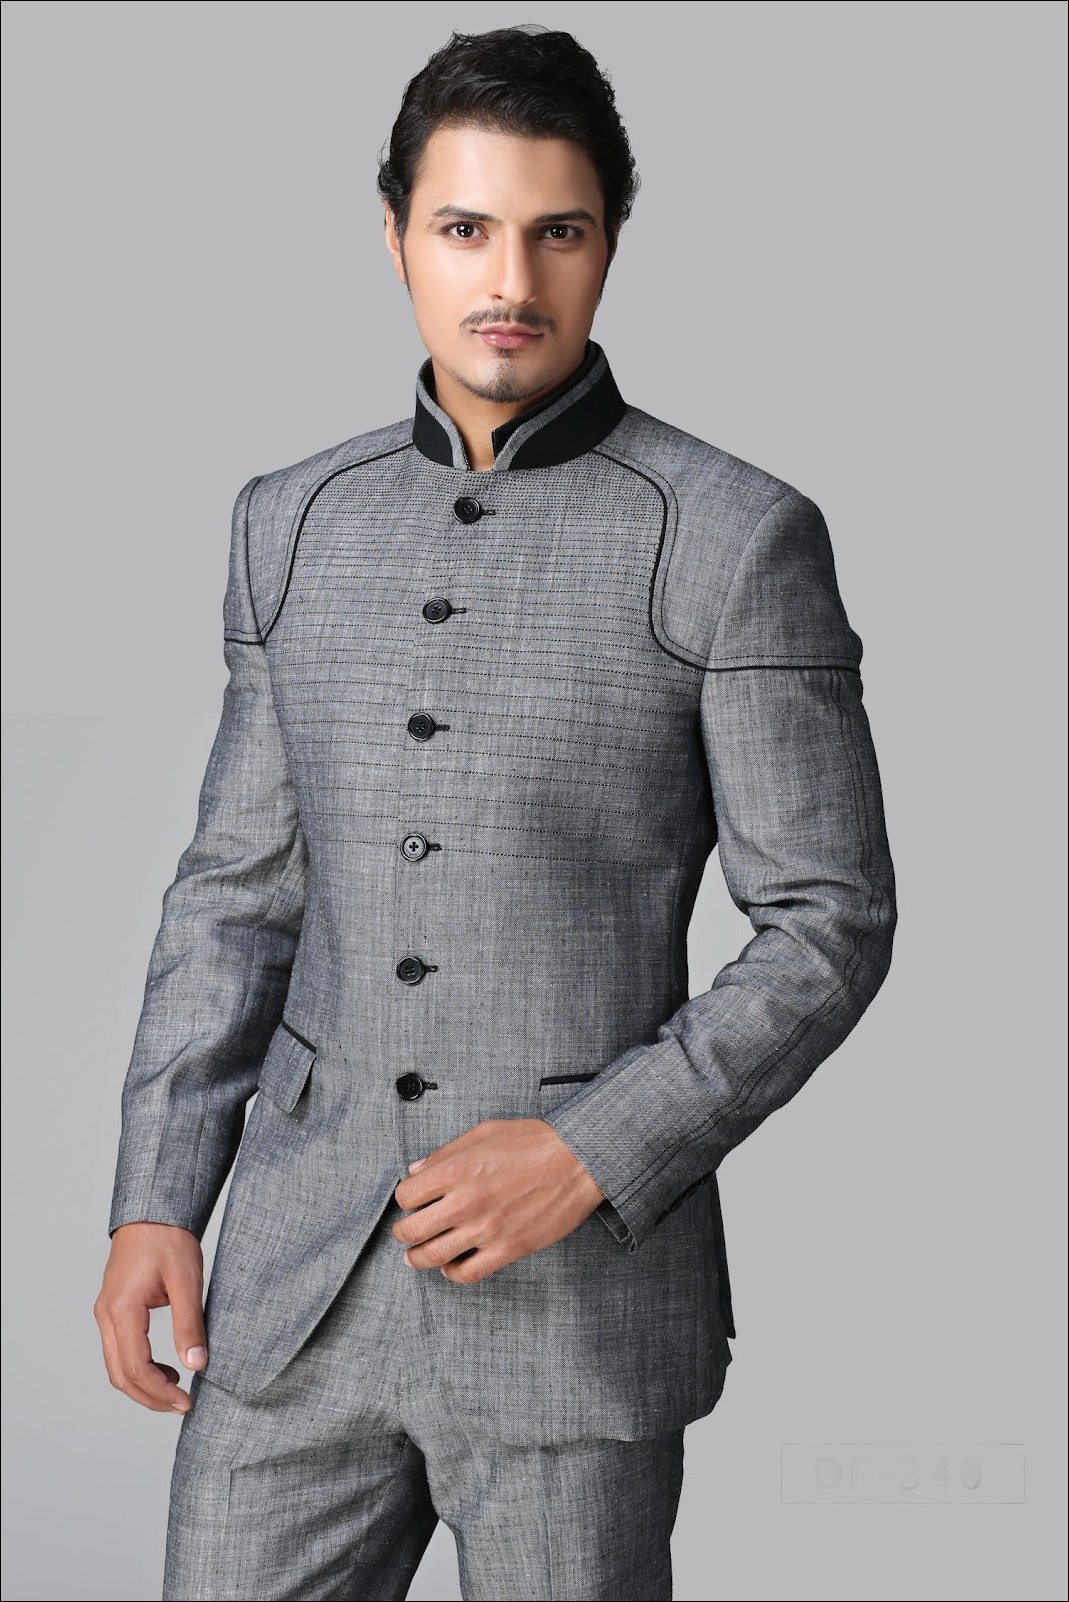 Designer Suit For Men